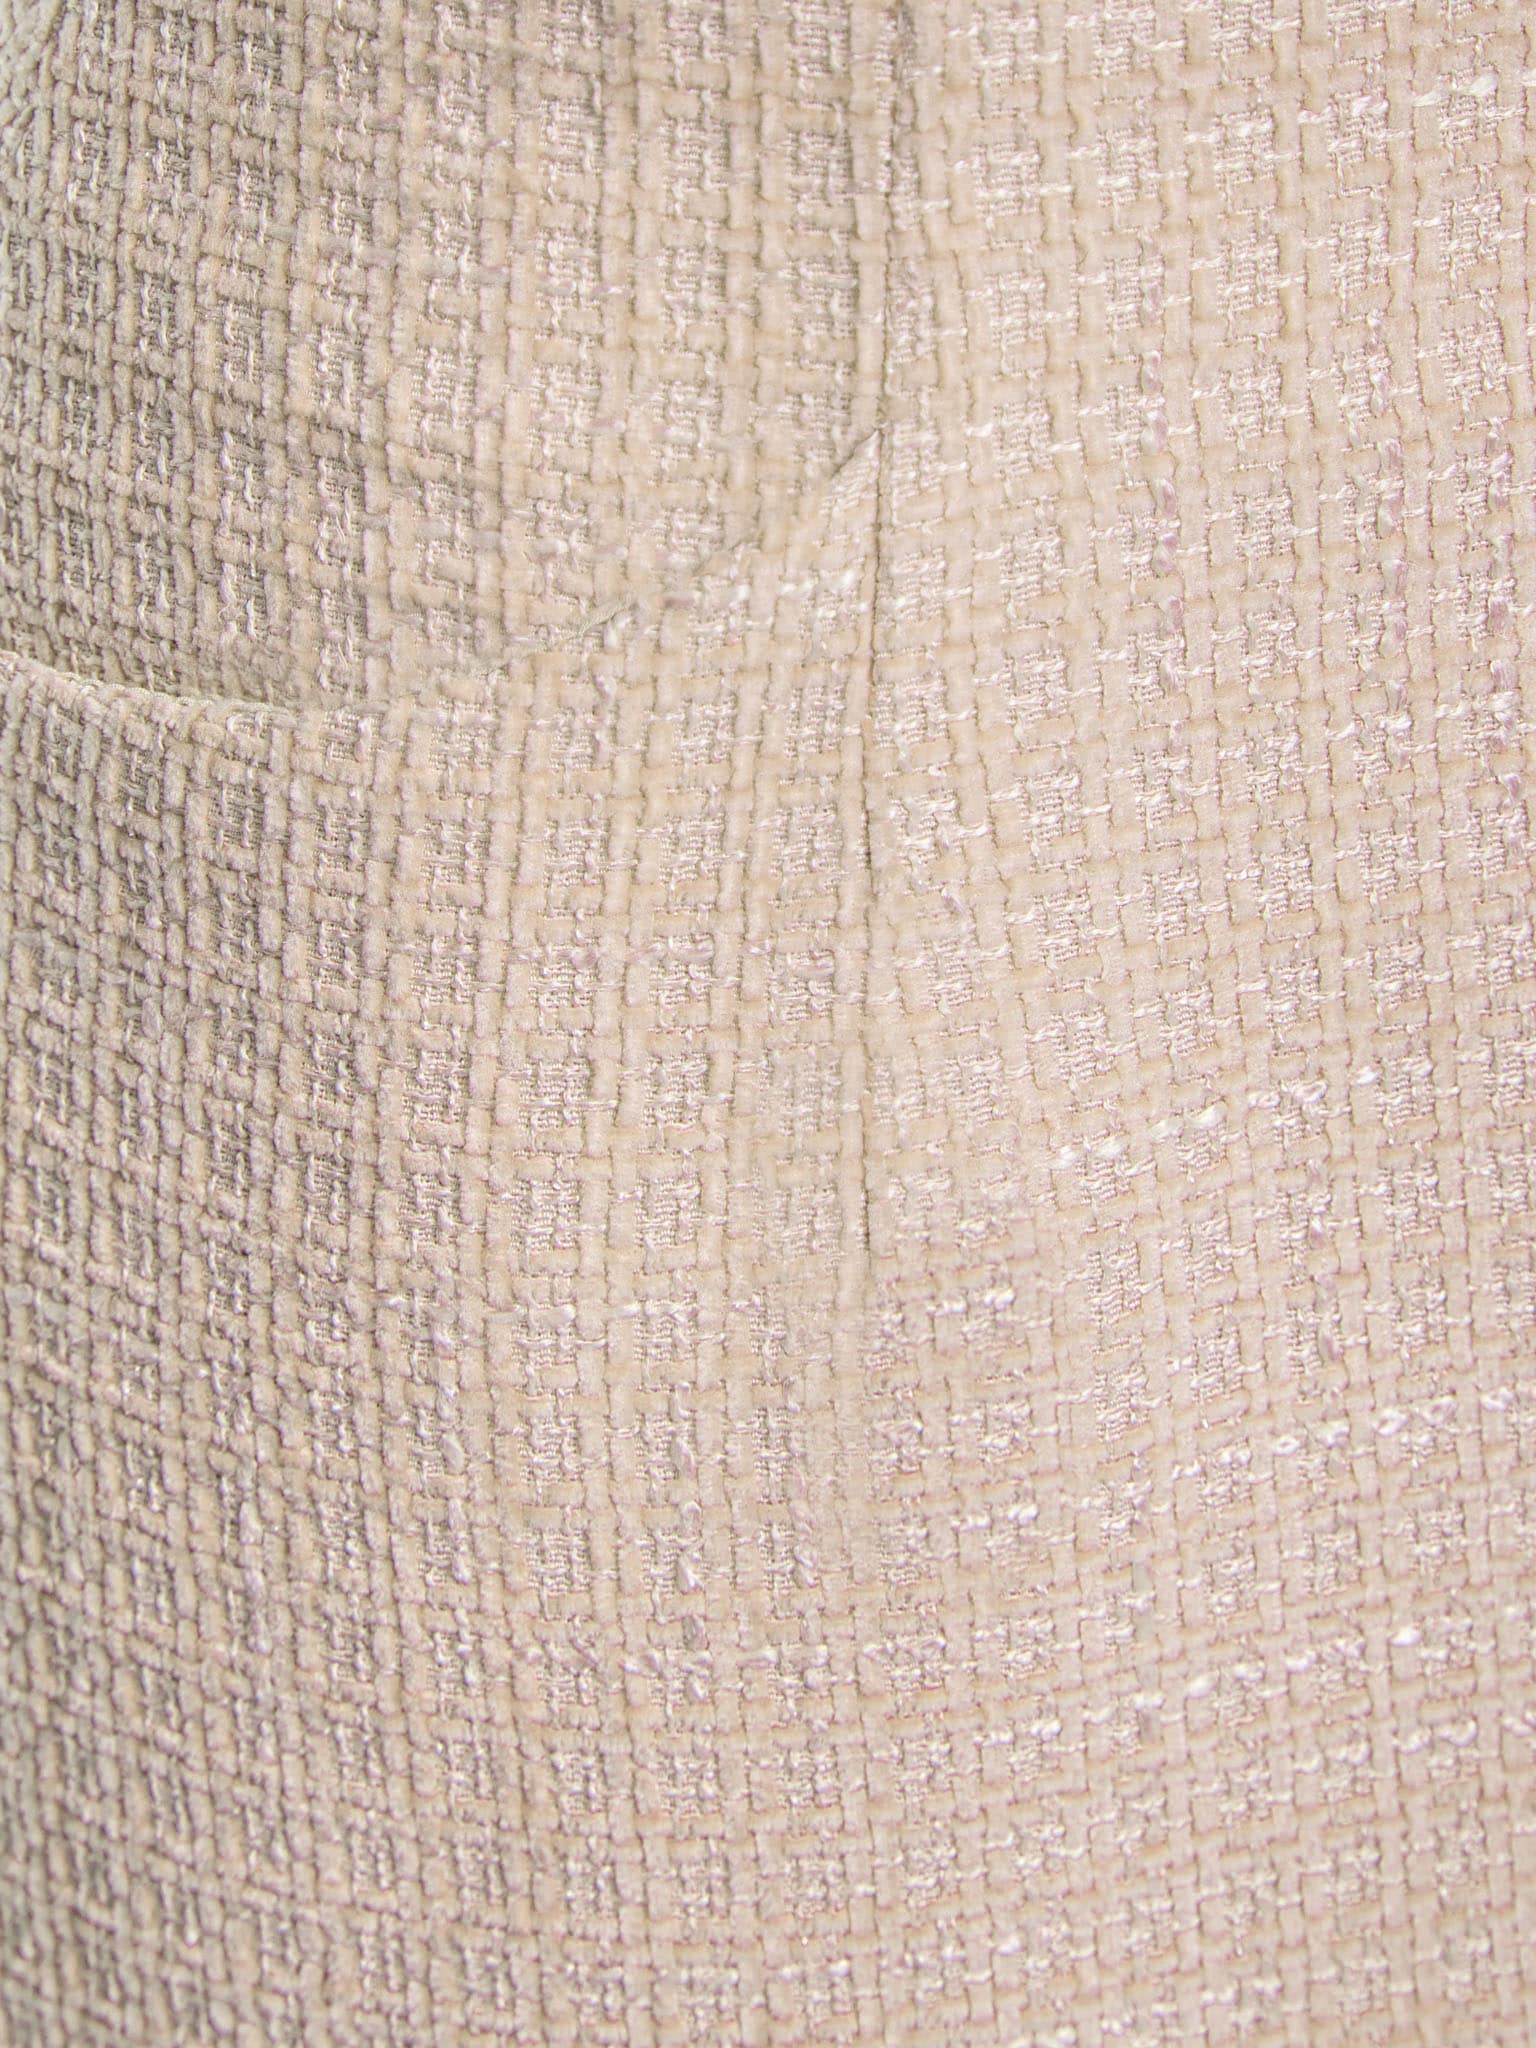 Tweed mini skirt with pockets